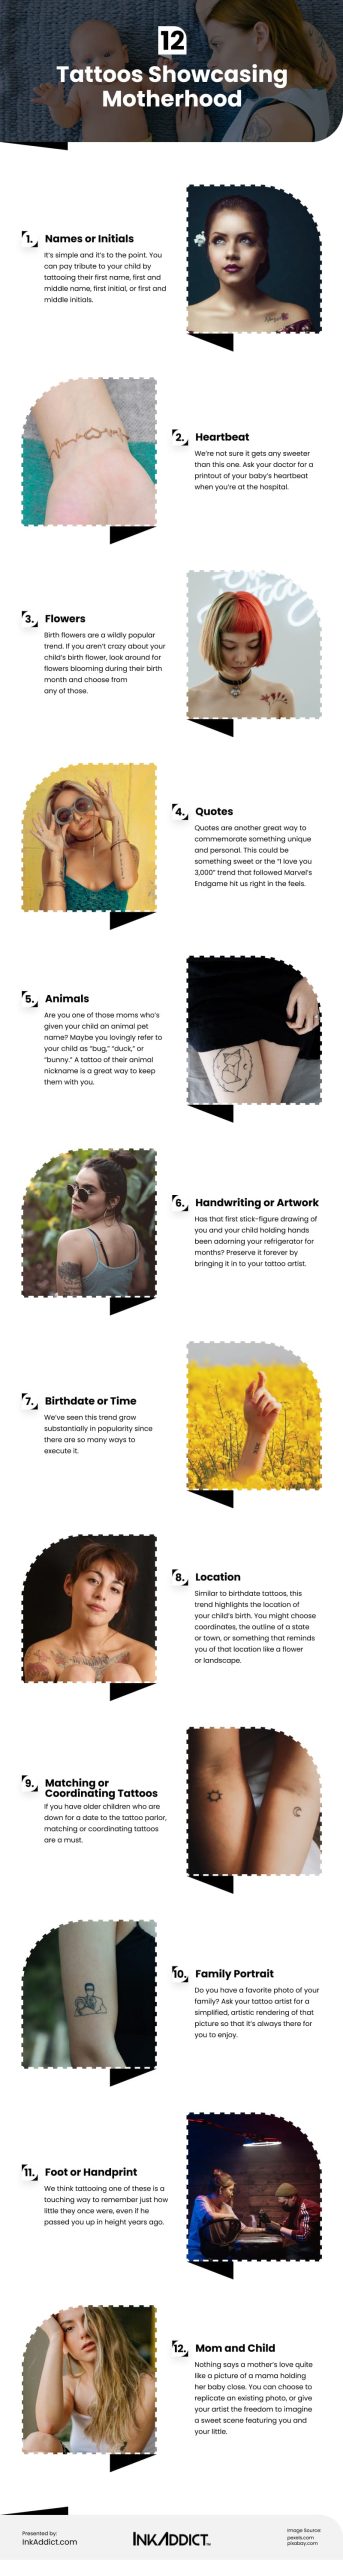 12 Tattoos Showcasing Motherhood Infographic